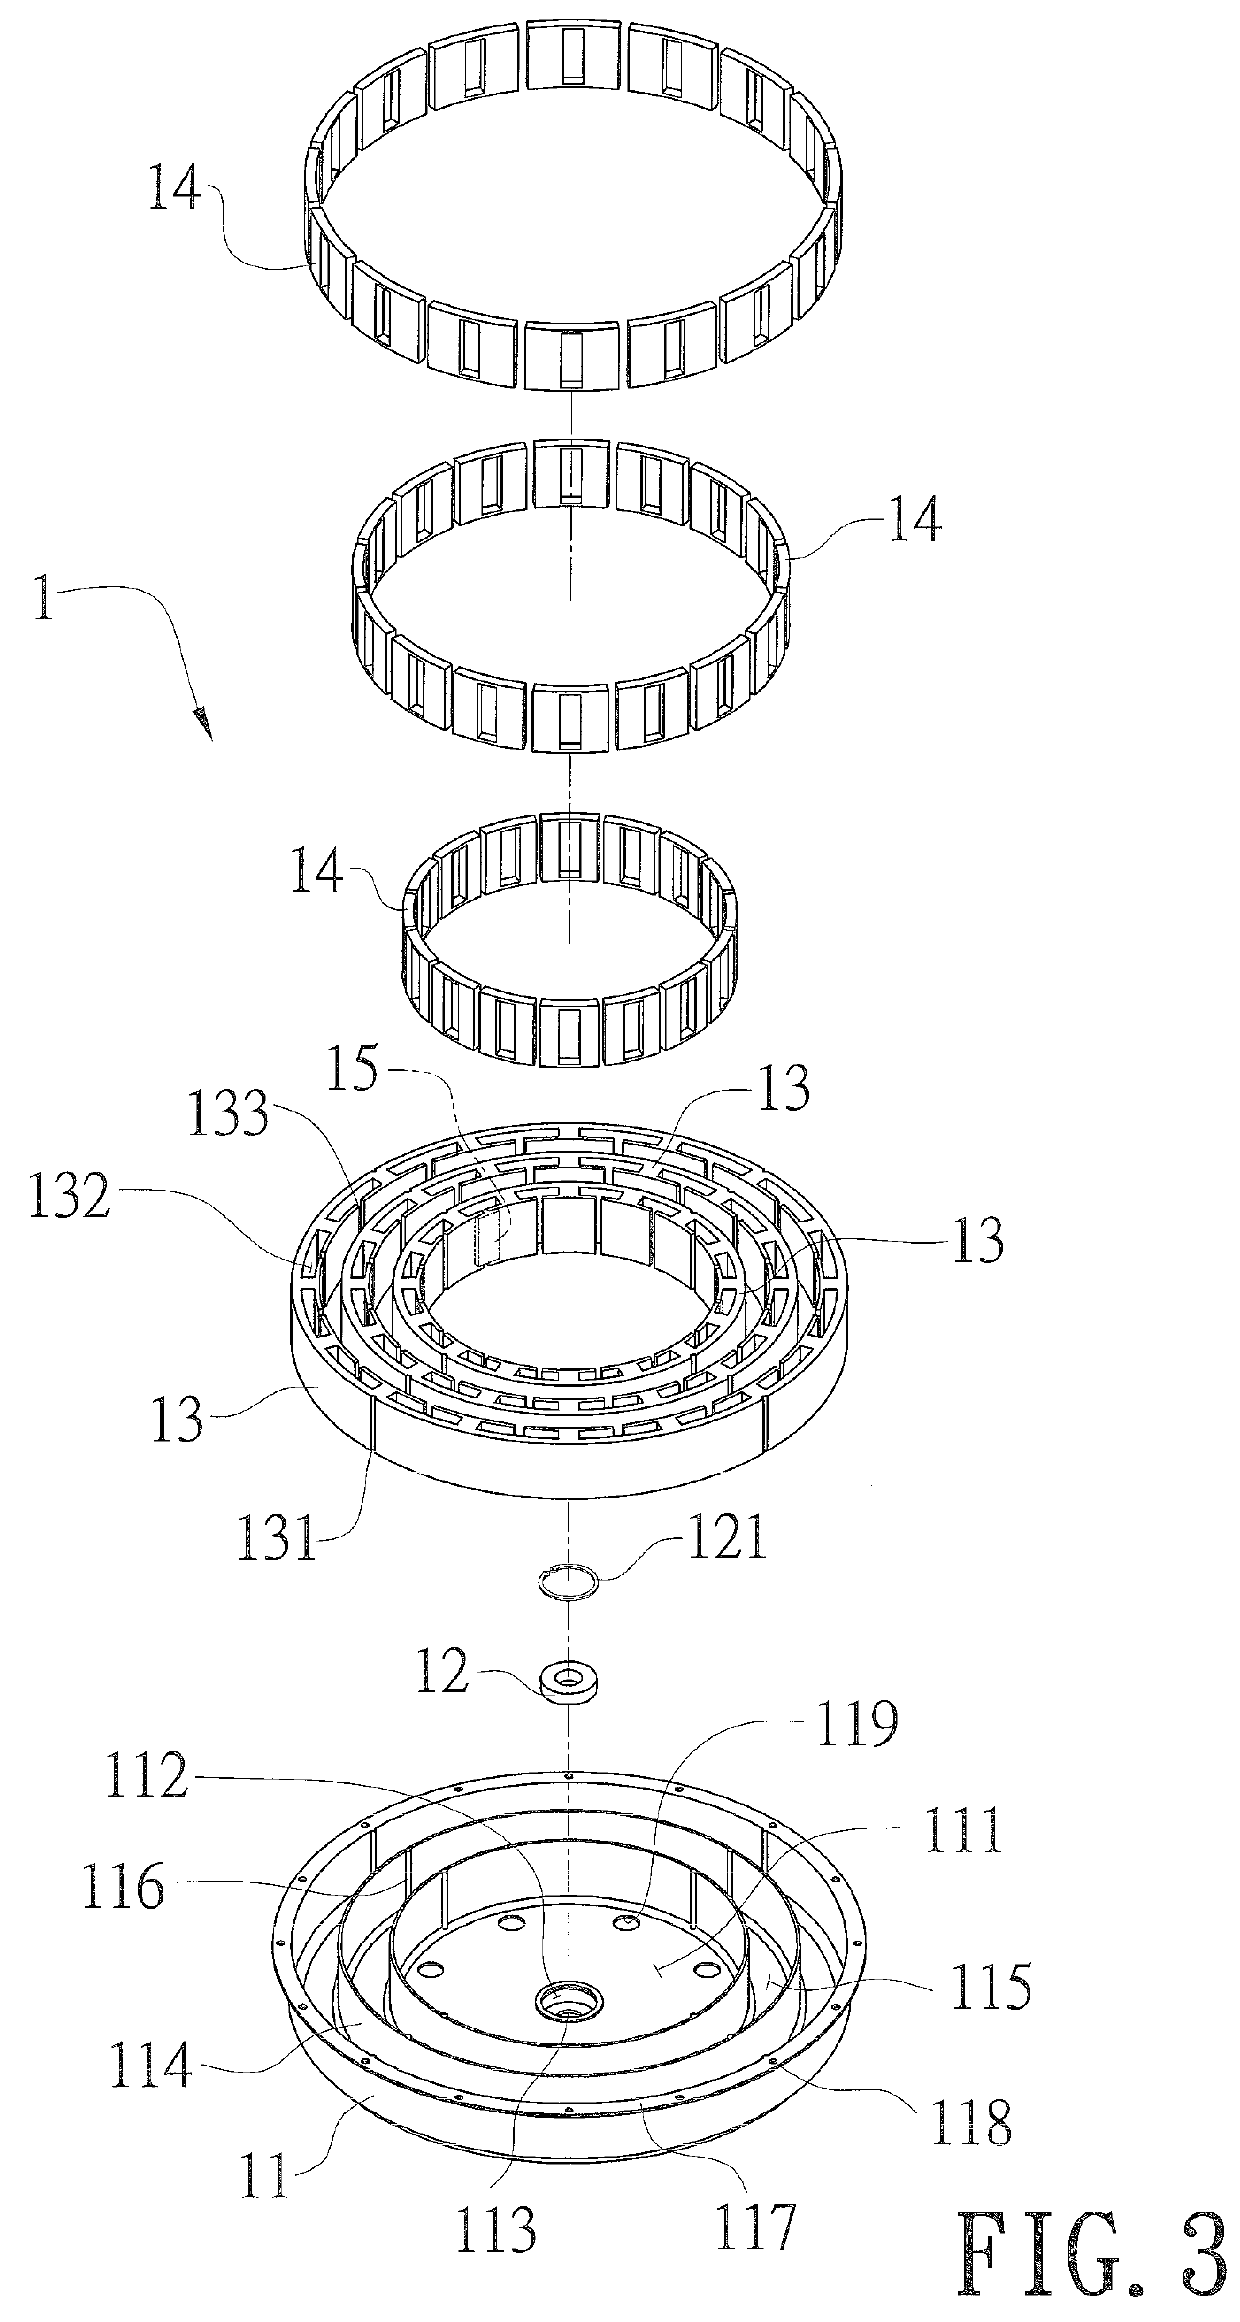 Multi-ring disc motor